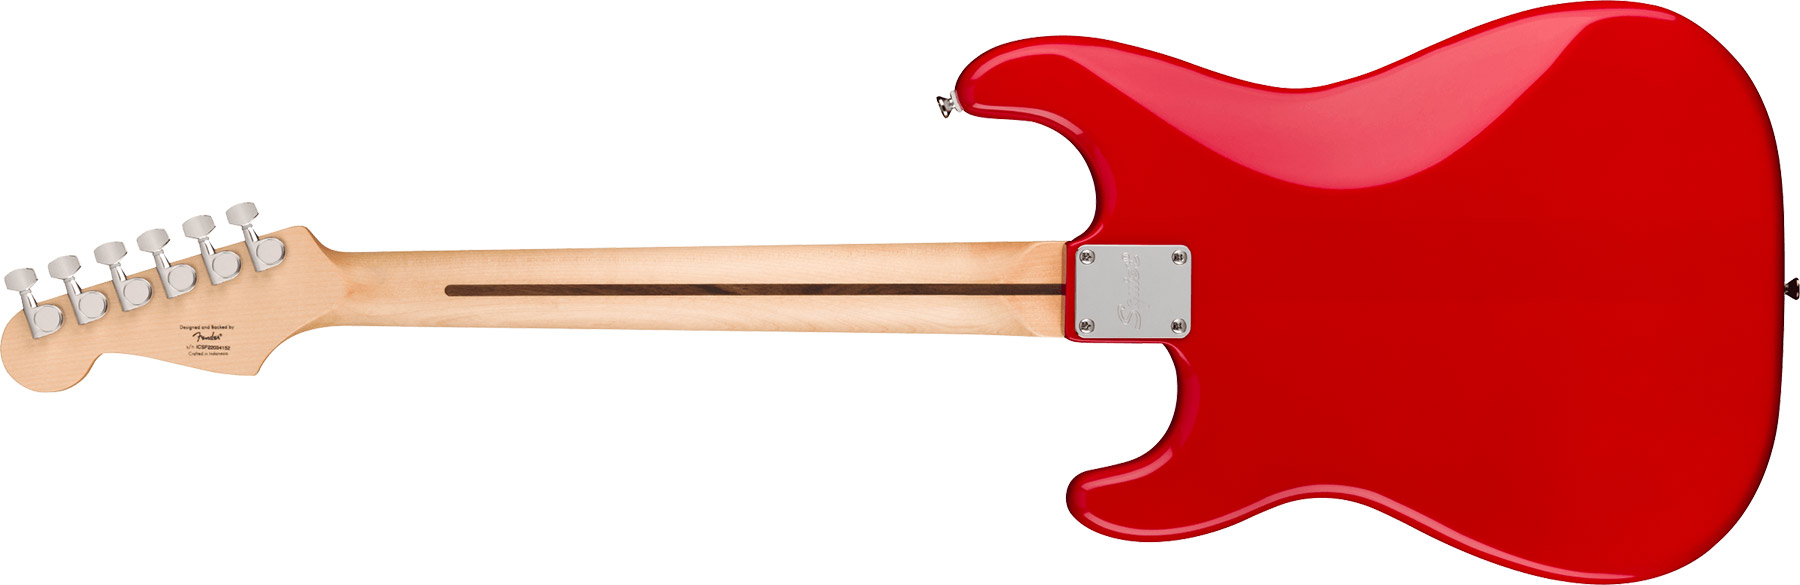 Squier Strat Sonic Hardtail 3s Ht Lau - Torino Red - Guitarra eléctrica con forma de str. - Variation 1